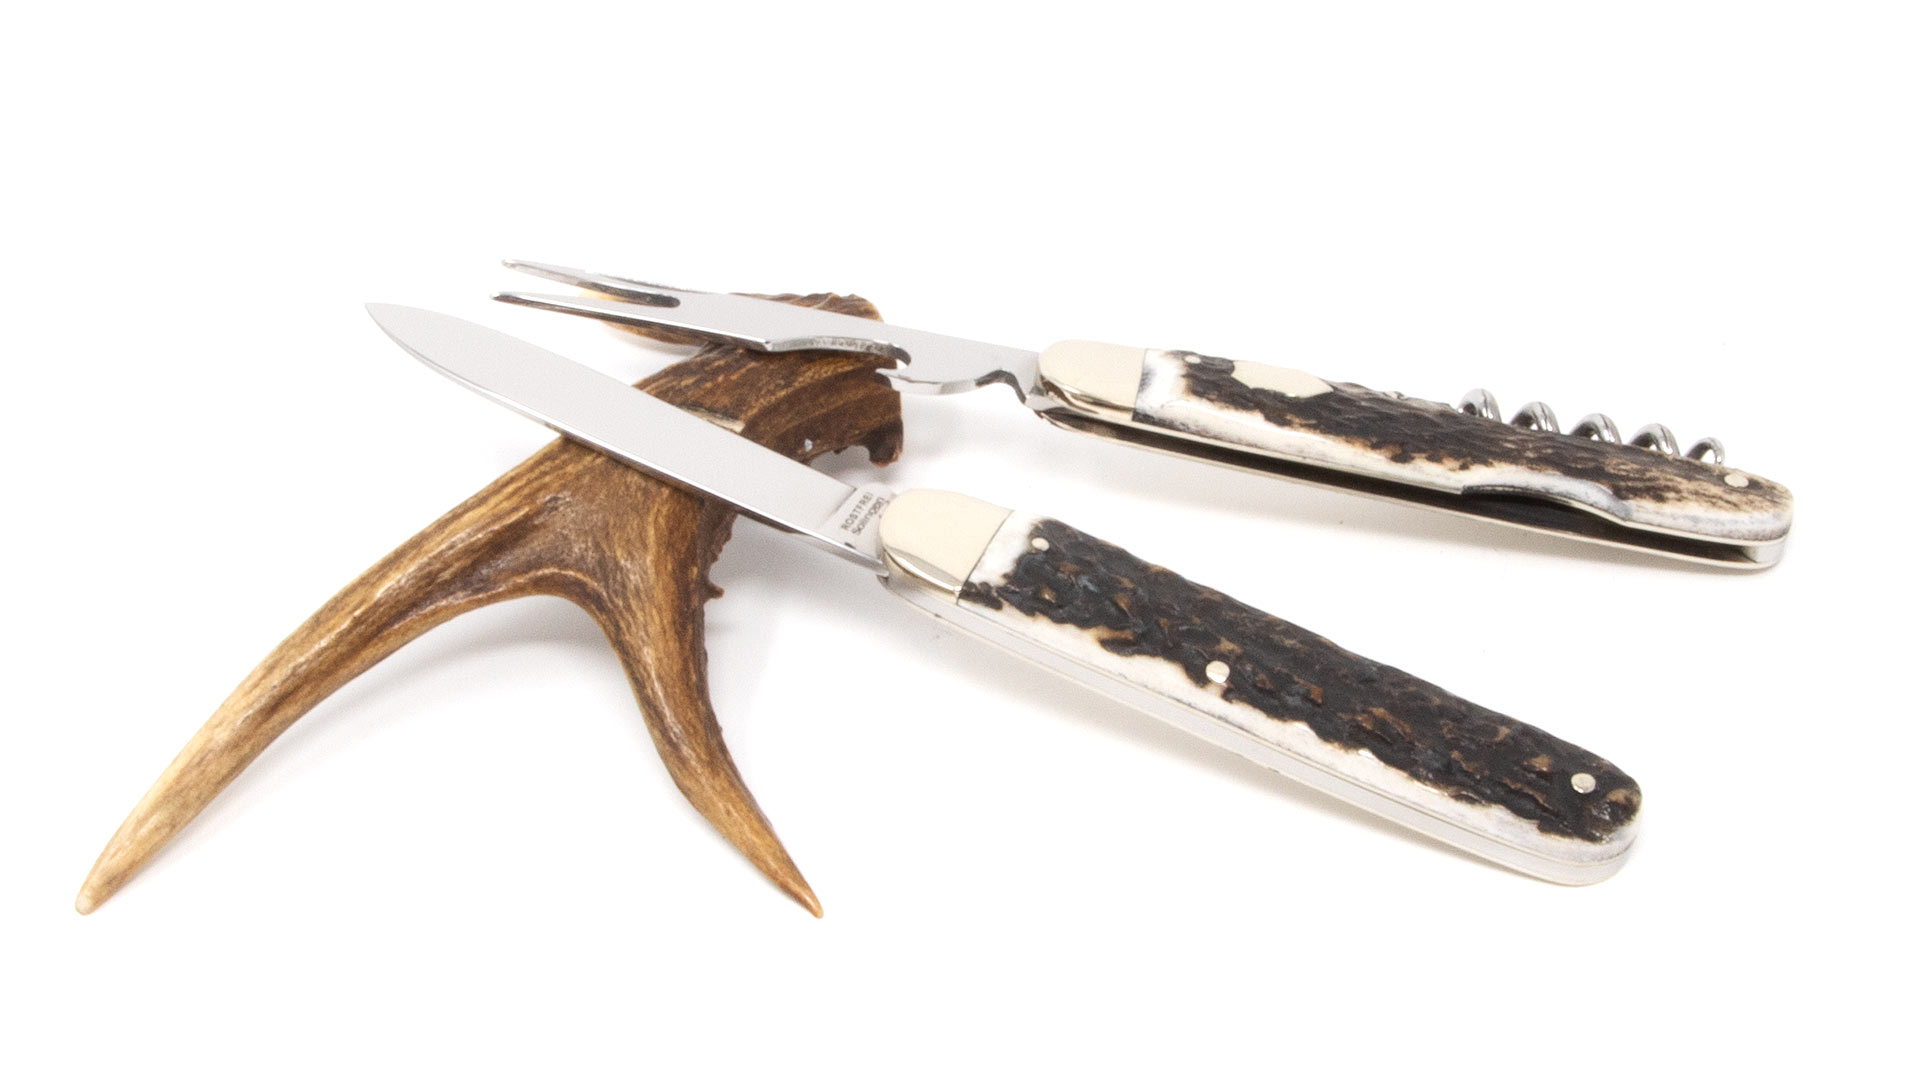 Hartkopf cutlery pocket knife staghorn with corkscrew